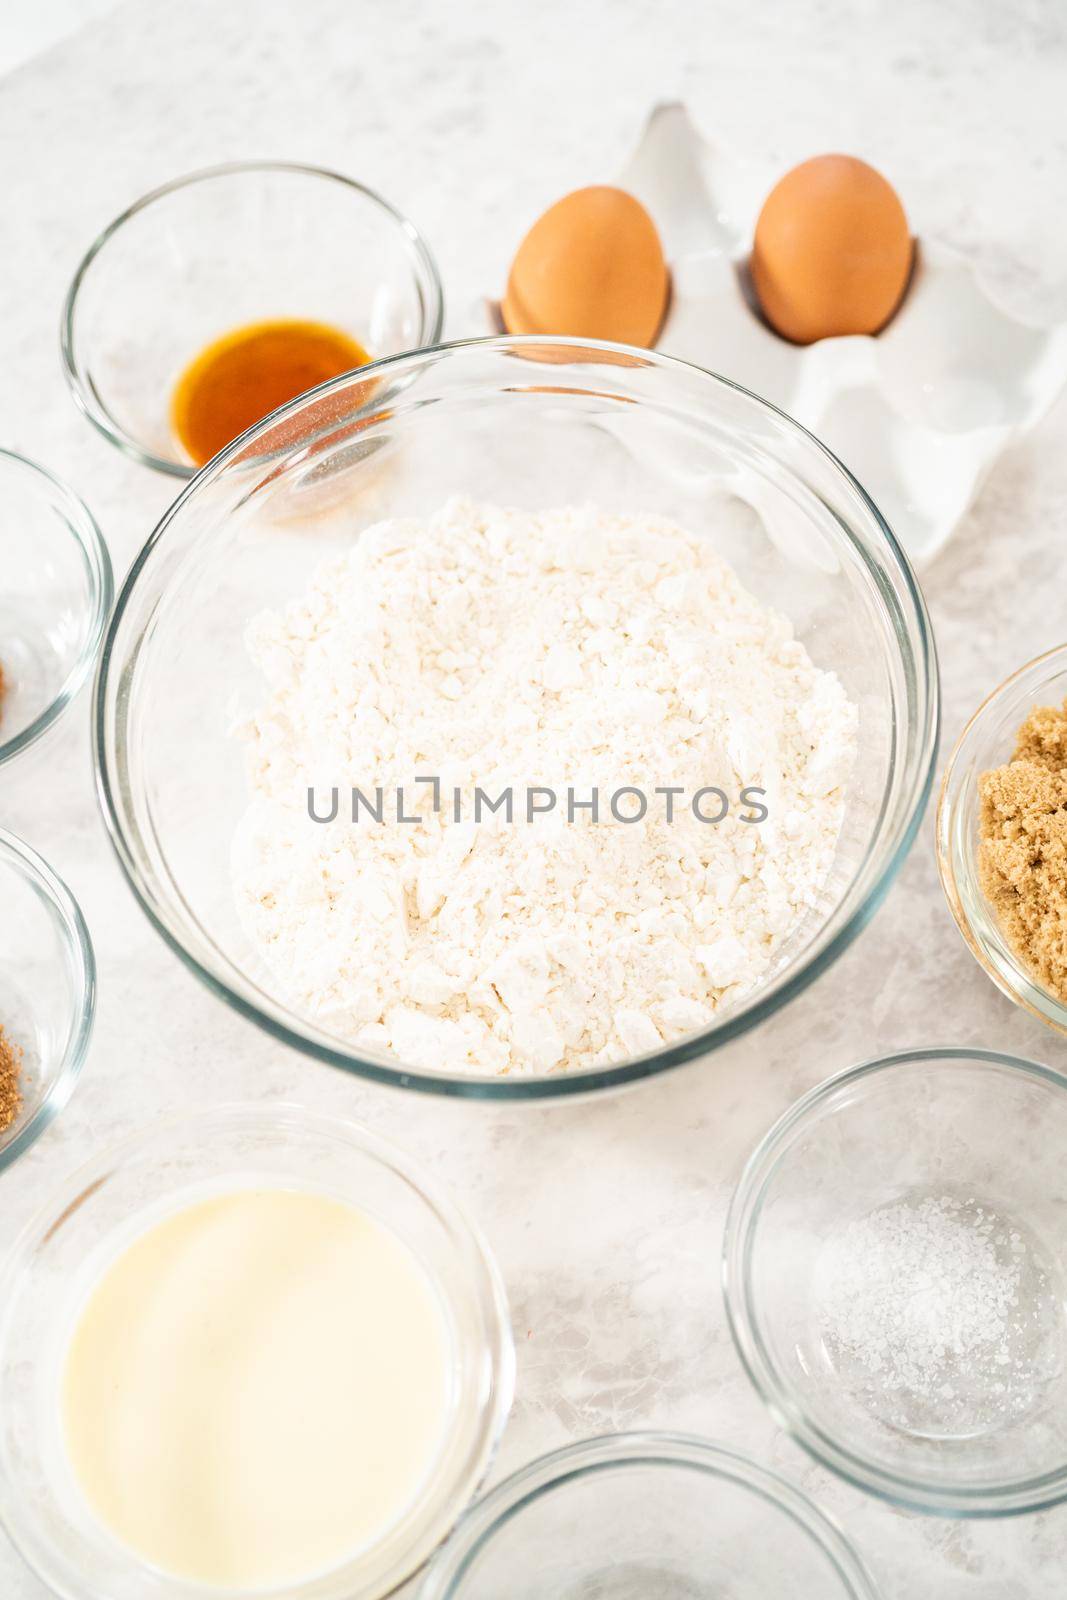 Measured ingredients in glass mixing bowls to bake eggnog scones.